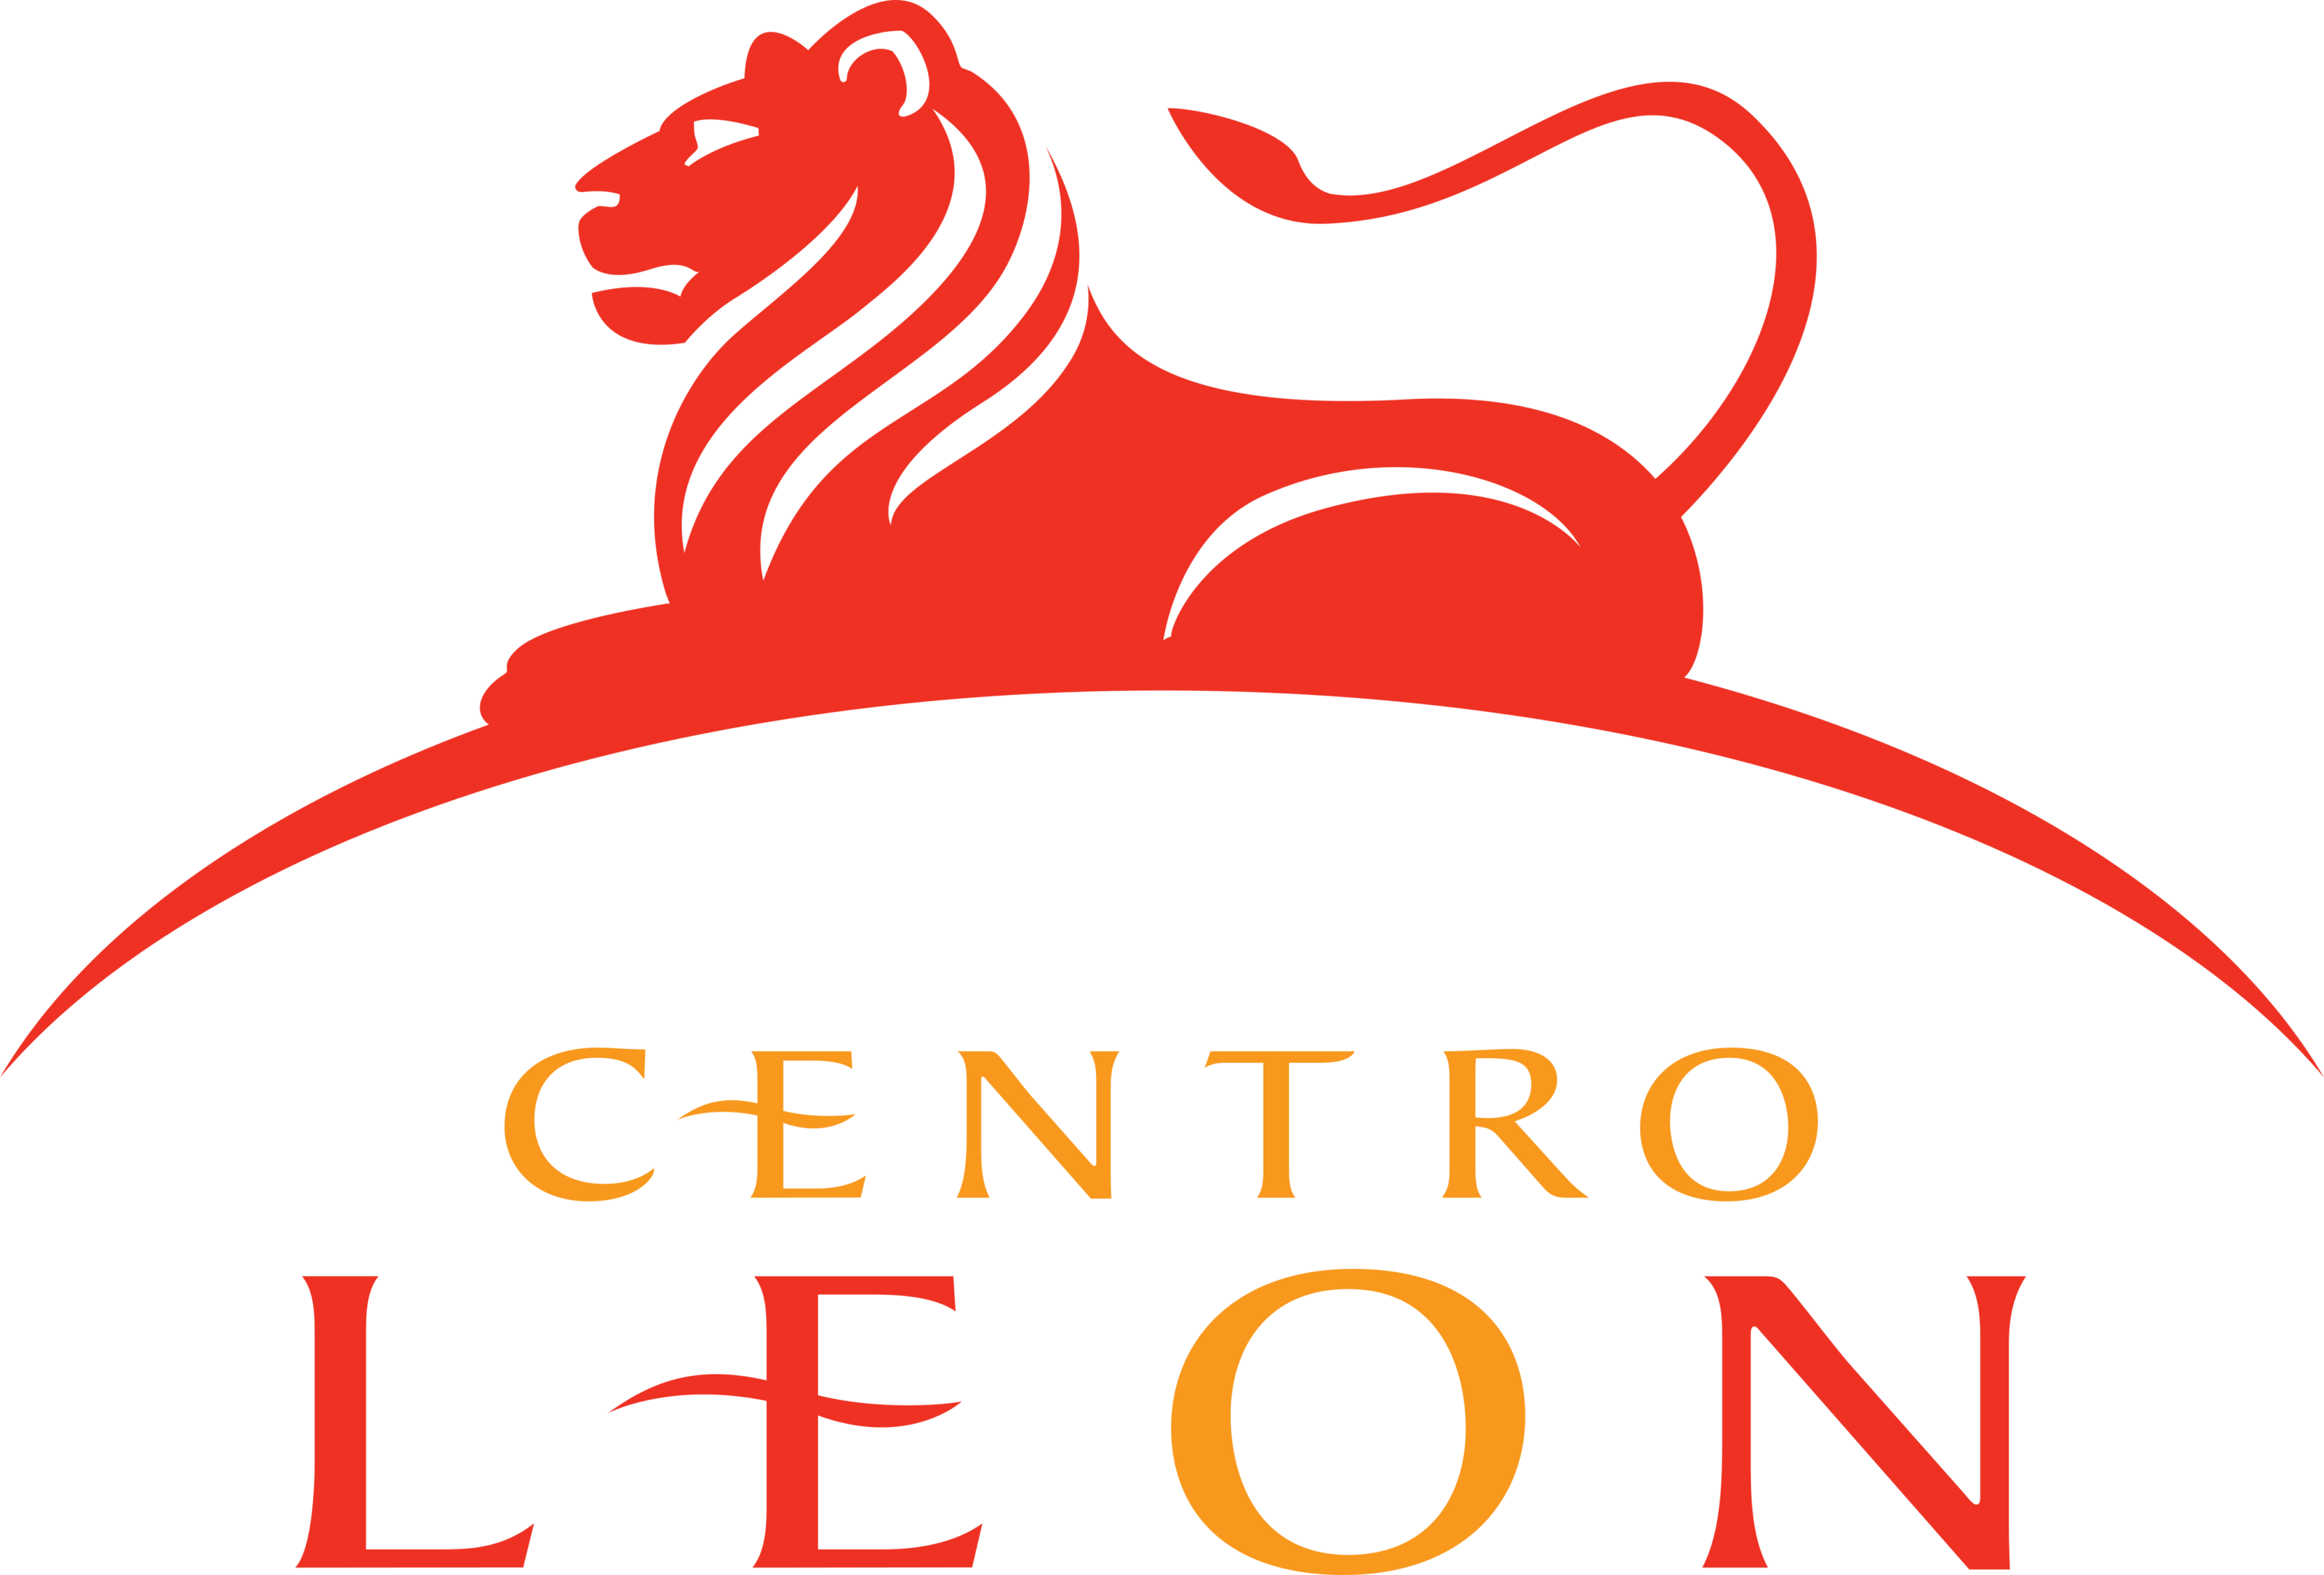 Centro Leon Logo